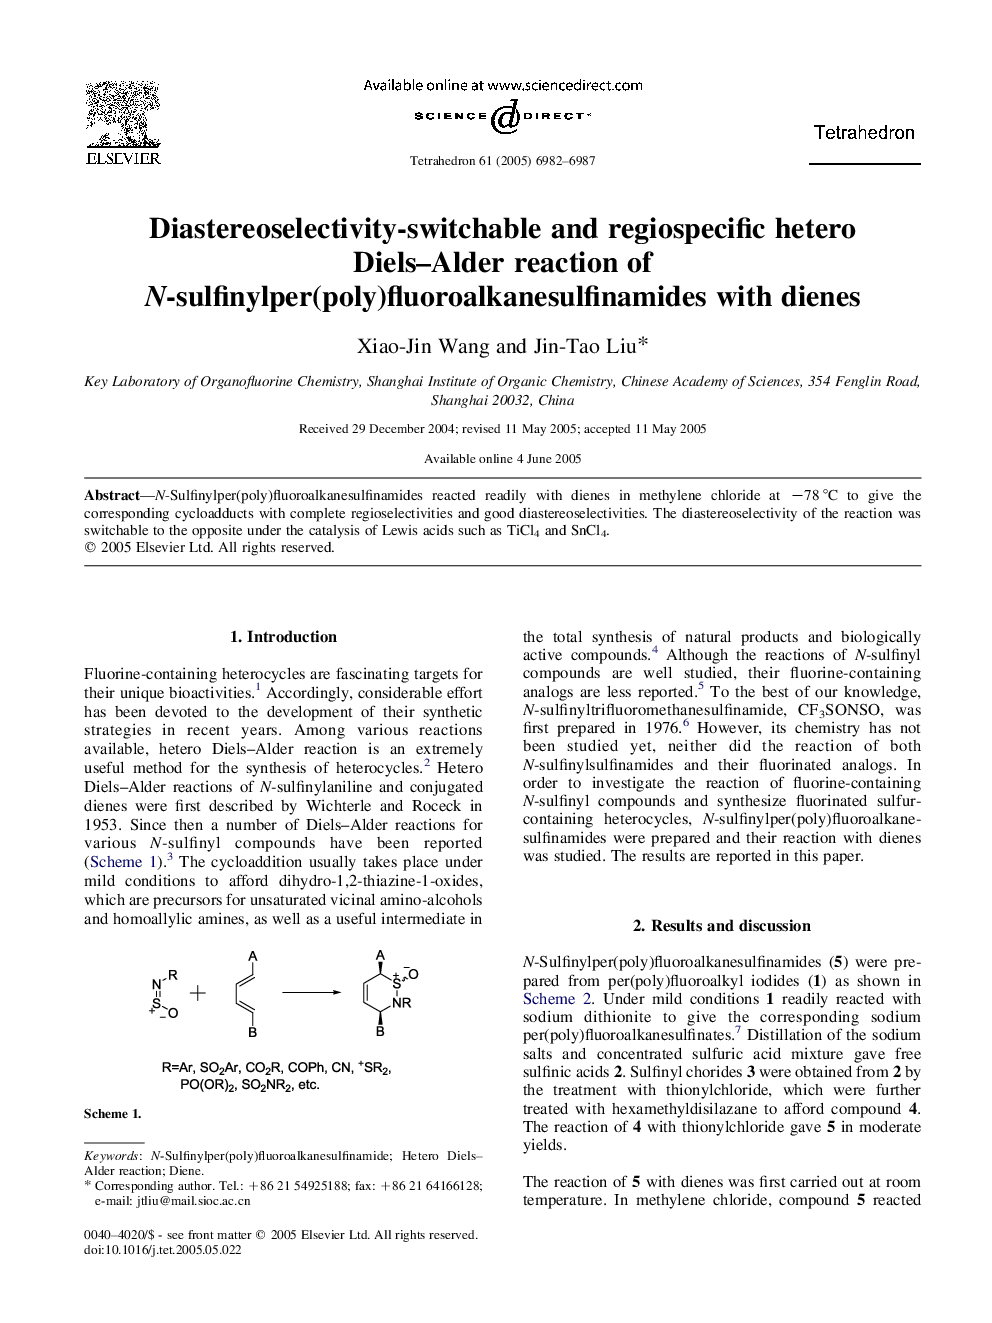 Diastereoselectivity-switchable and regiospecific hetero Diels-Alder reaction of N-sulfinylper(poly)fluoroalkanesulfinamides with dienes